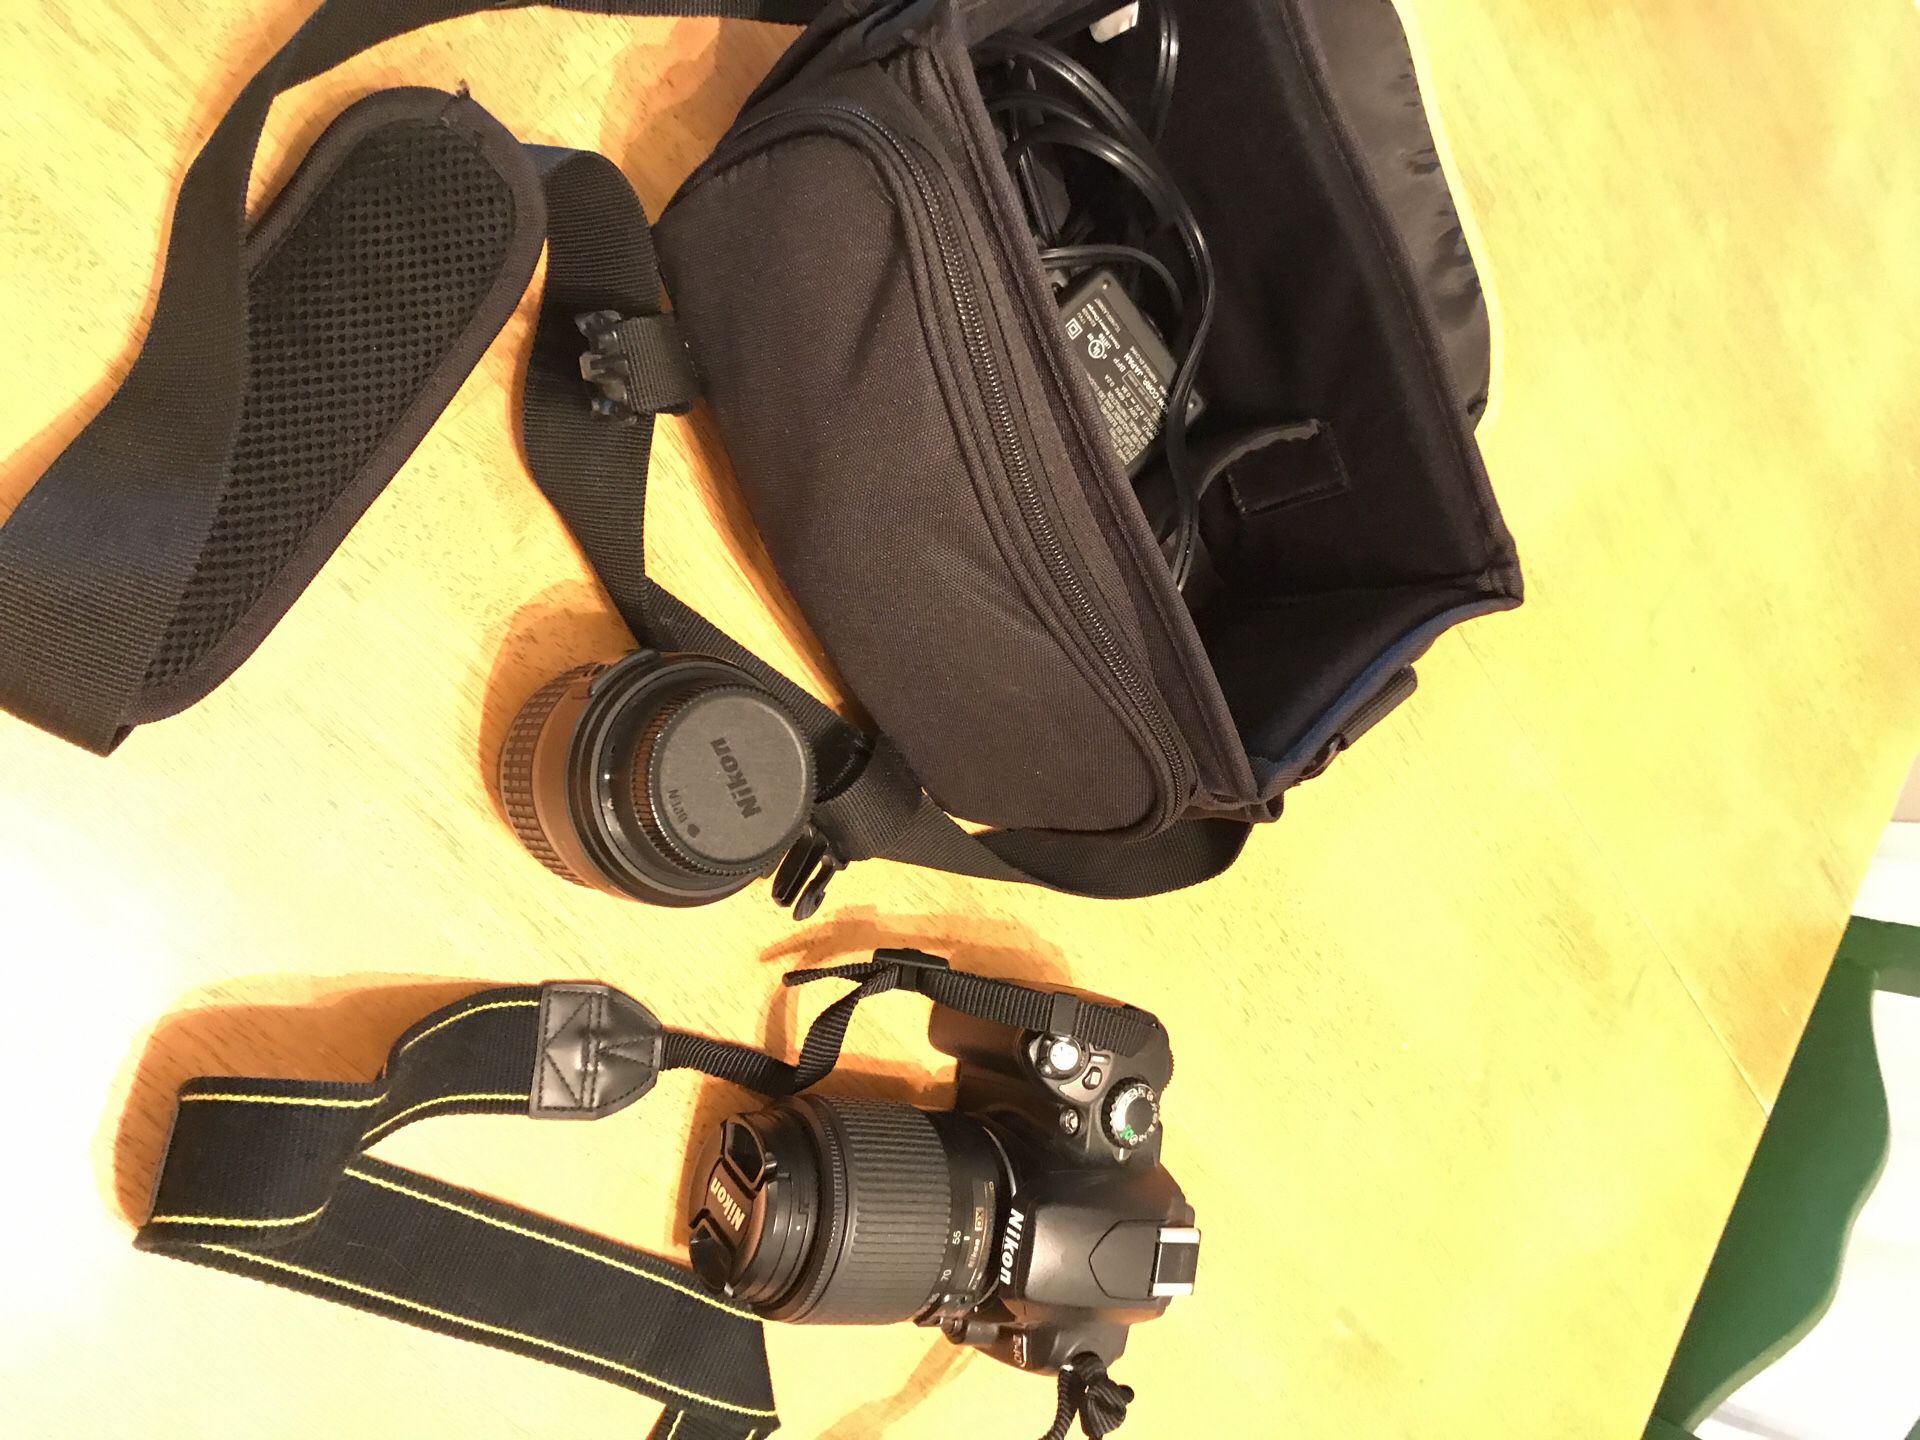 Nikon D40 with two detachable lenses